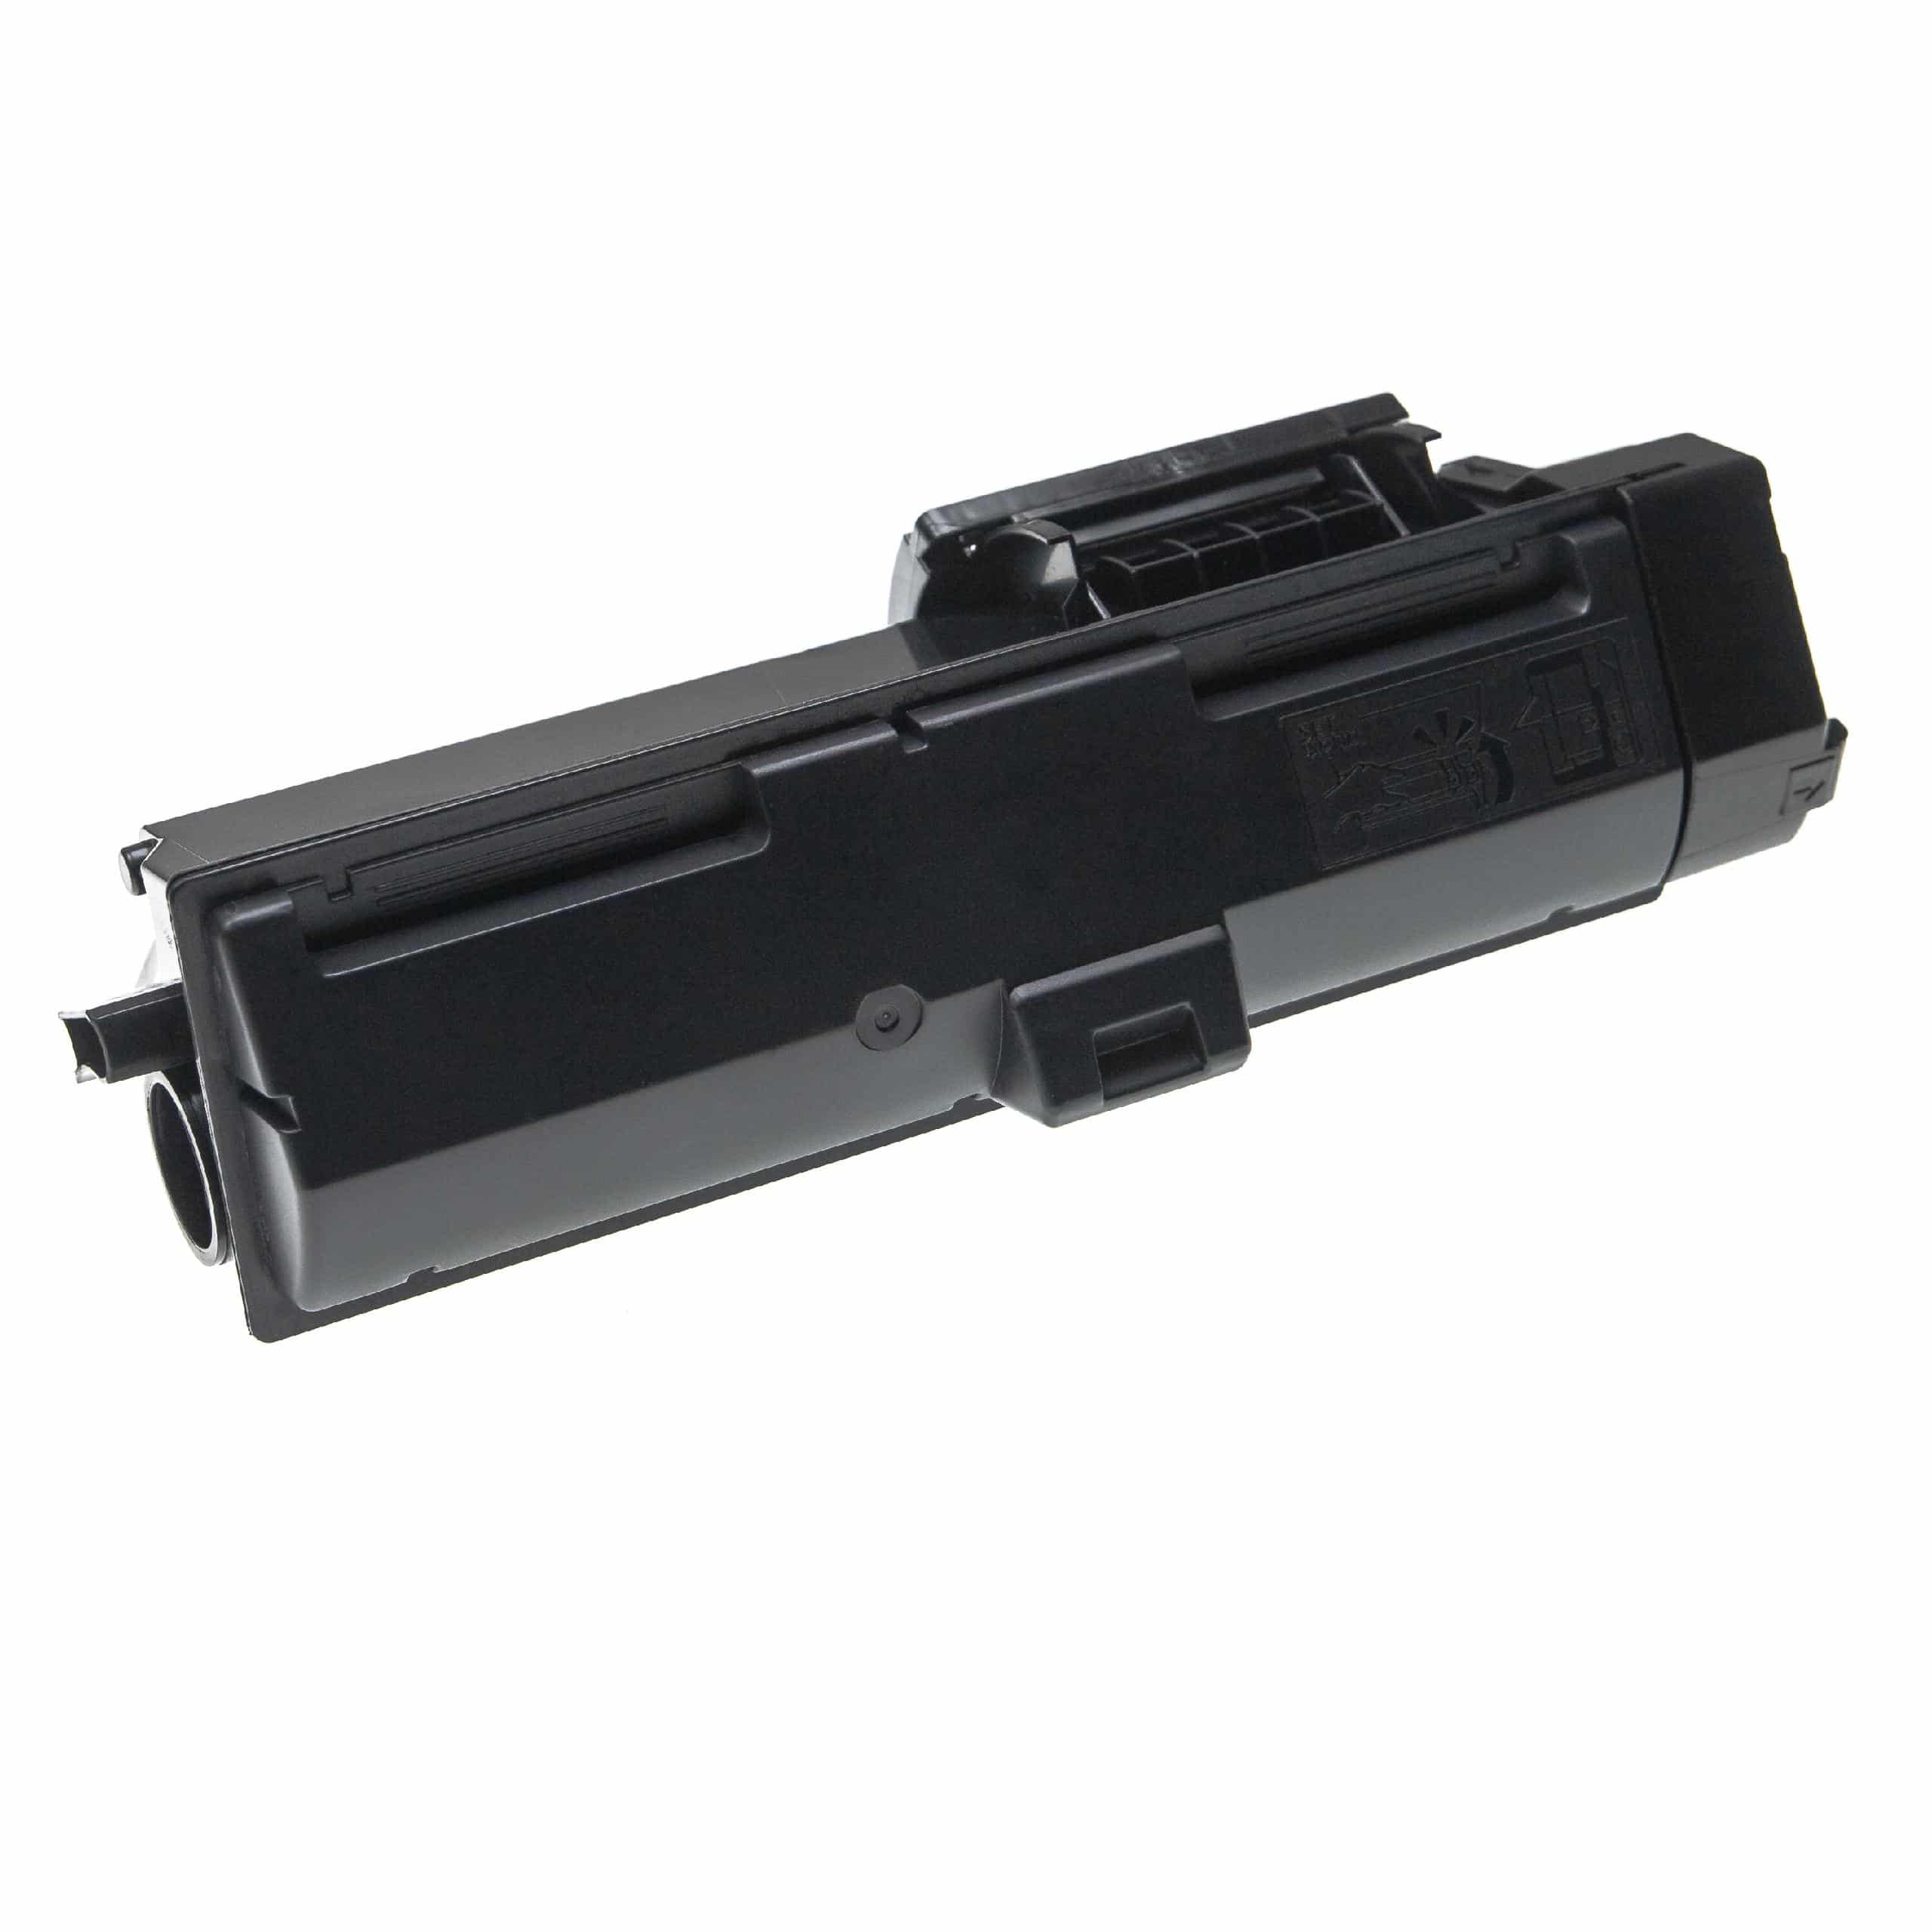 Tóner reemplaza Kyocera TK-1150 compatible con impresoras Kyocera, negro